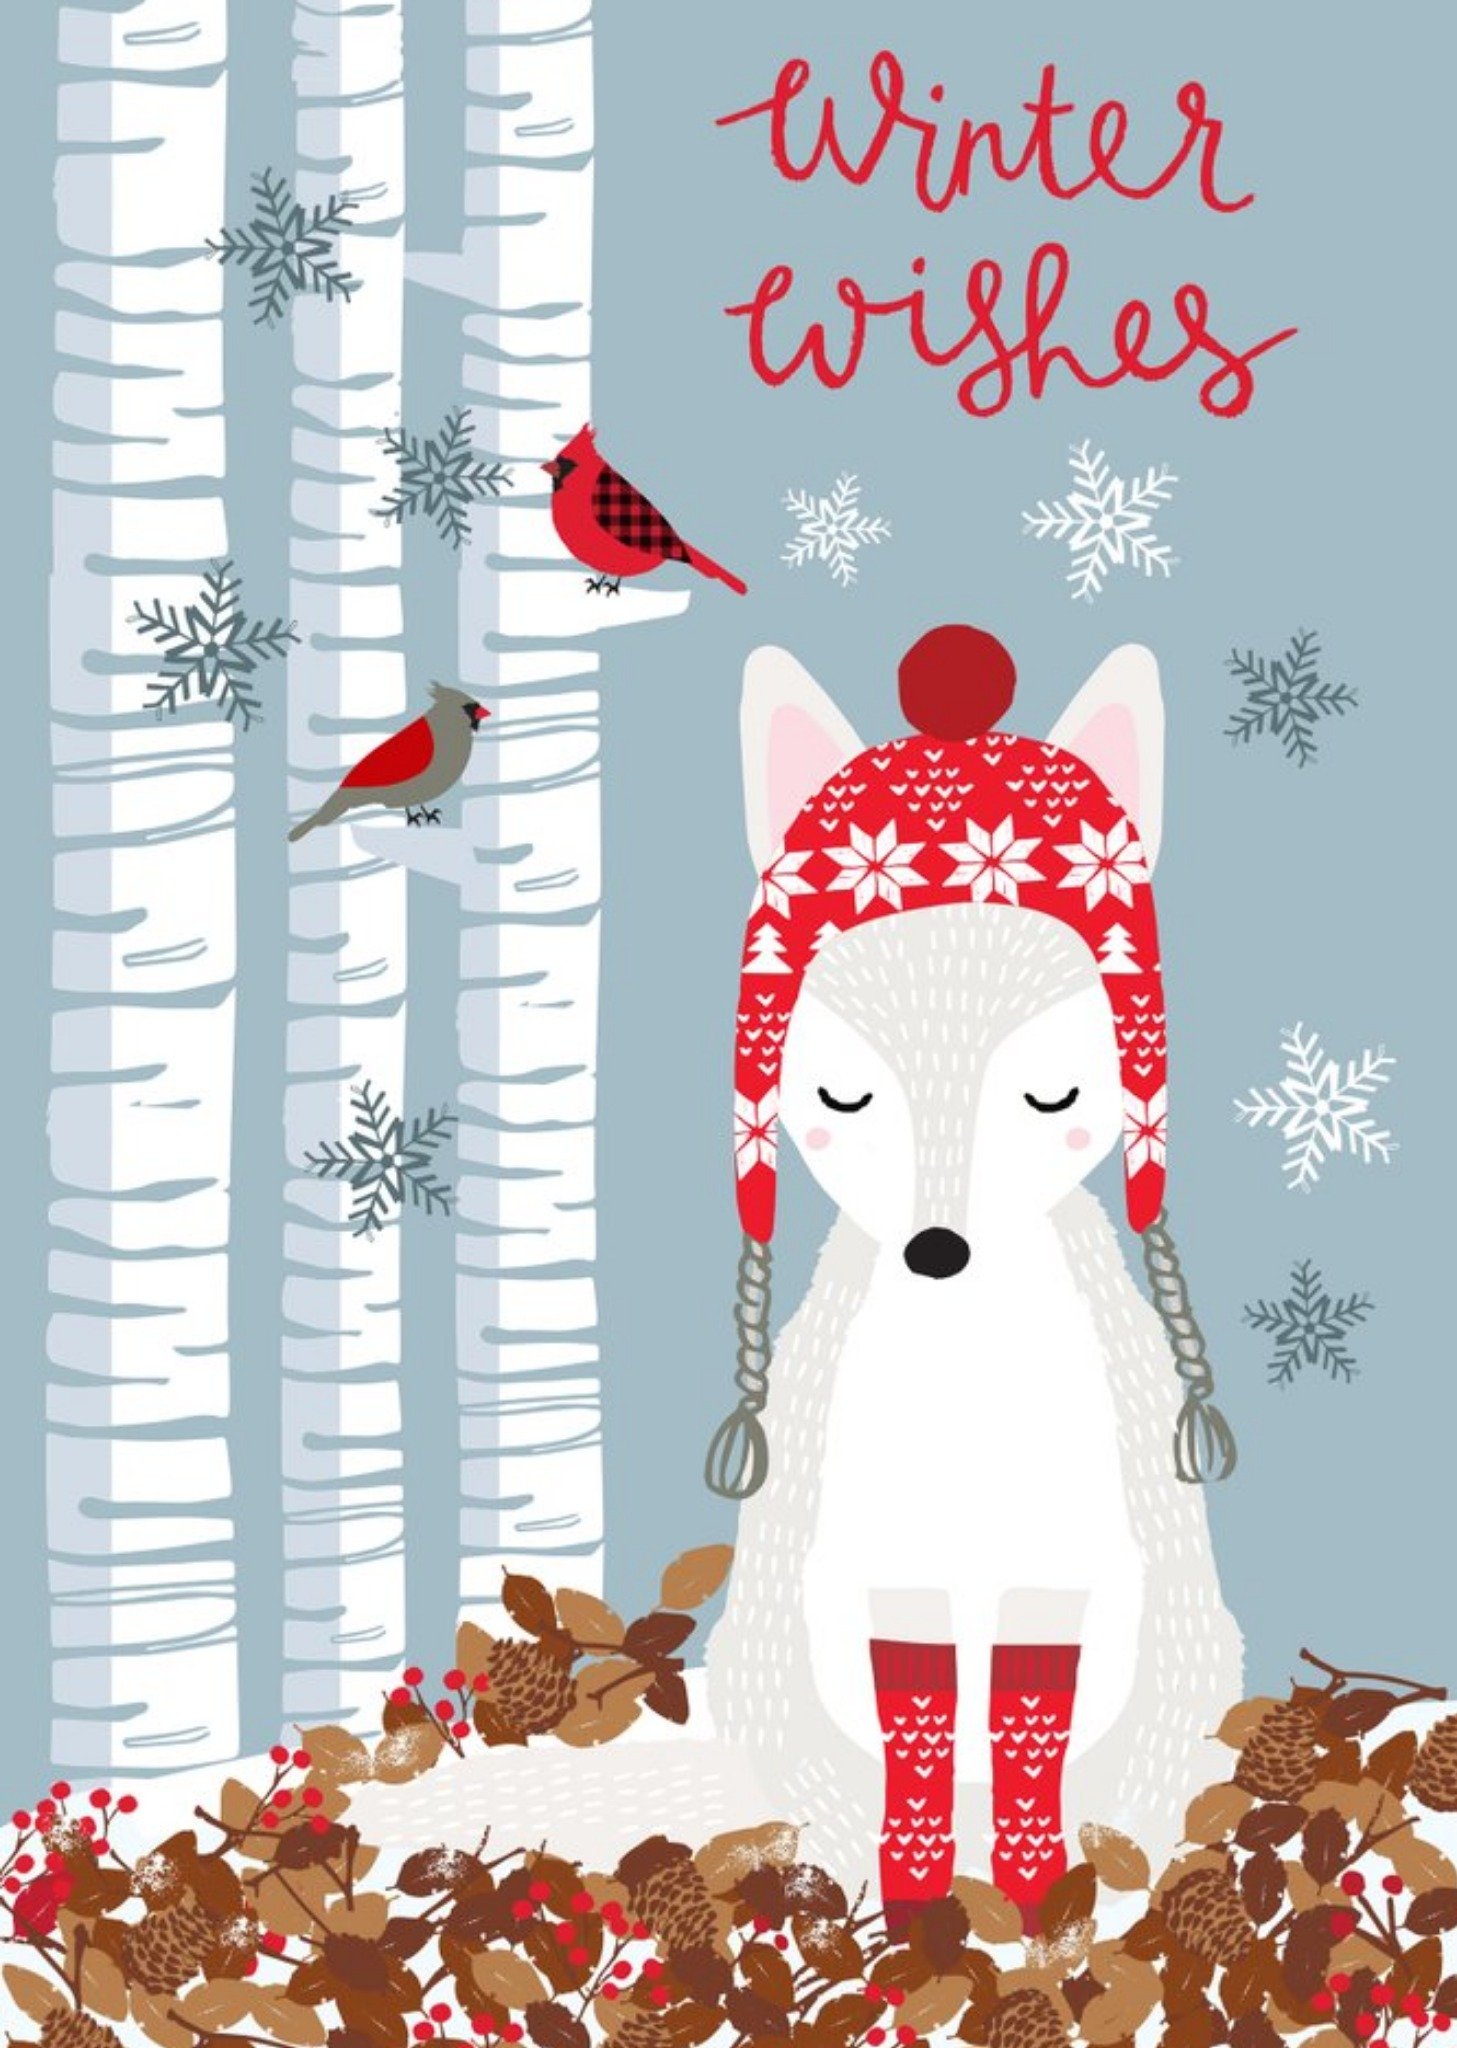 Moonpig Cute Arctic Fox Woodland Scene Winter Wishes Christmas Card, Large